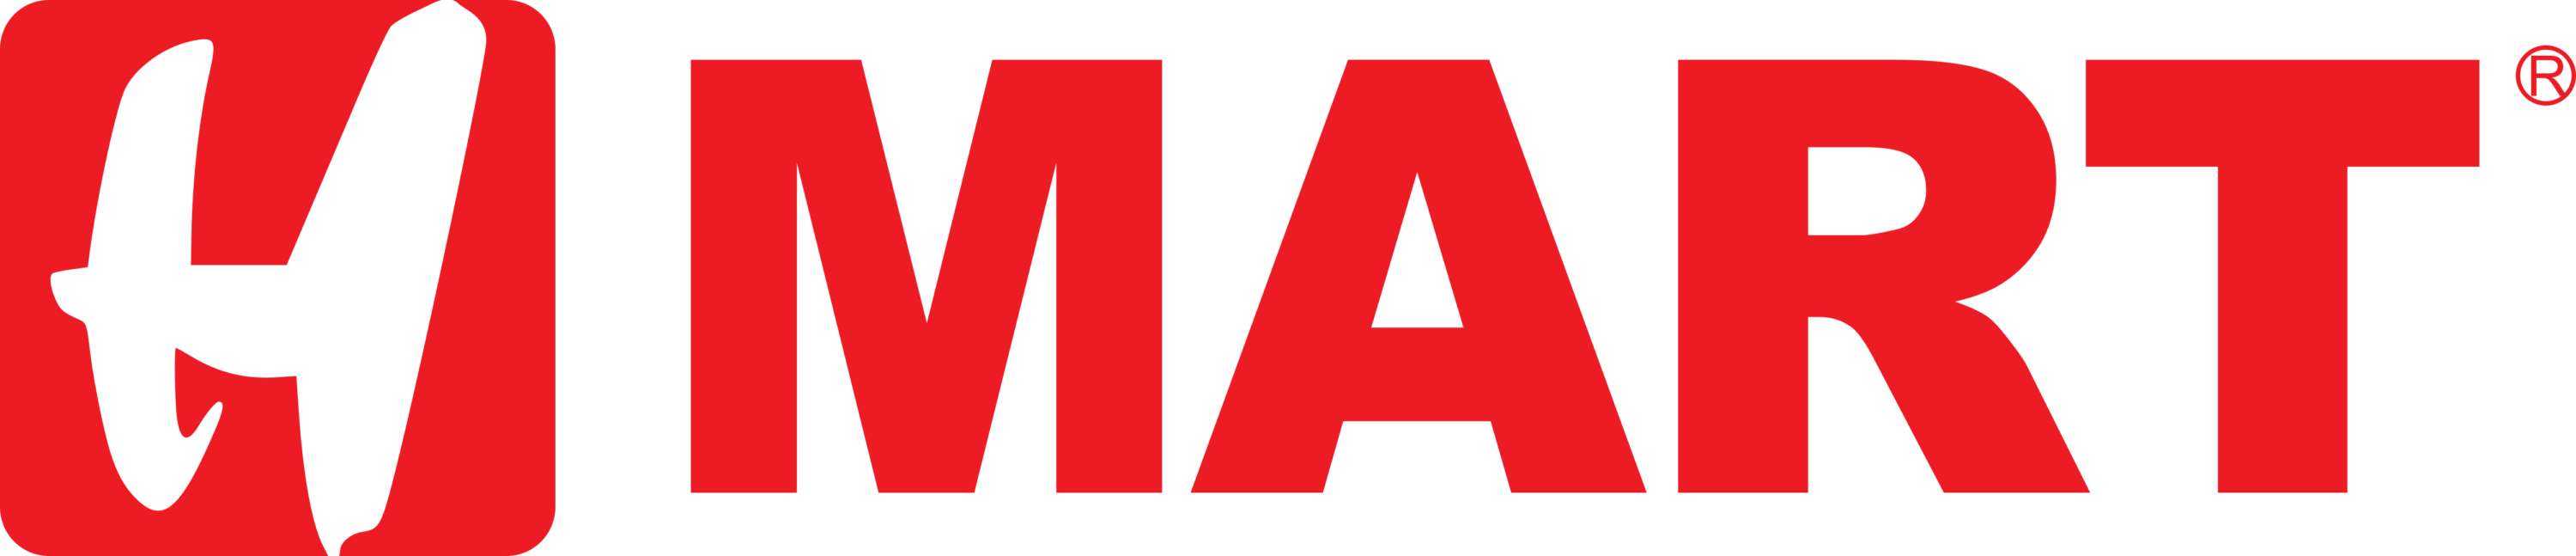 H Mart logo